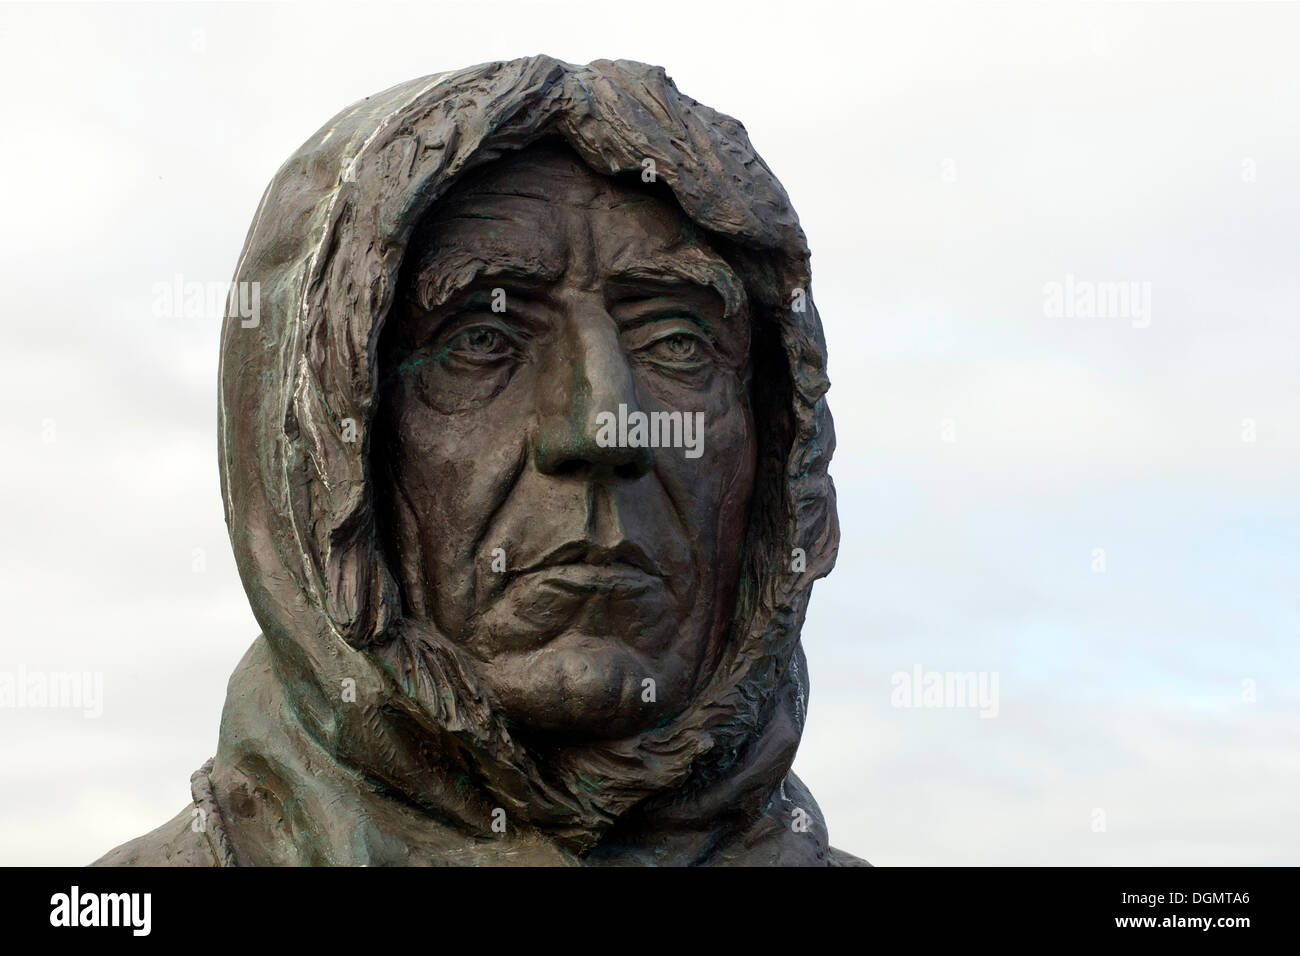 Bust of the Norwegian polar explorer Roald Amundsen, Ny-Ålesund, Spitsbergen Island, Svalbard Archipelago Stock Photo